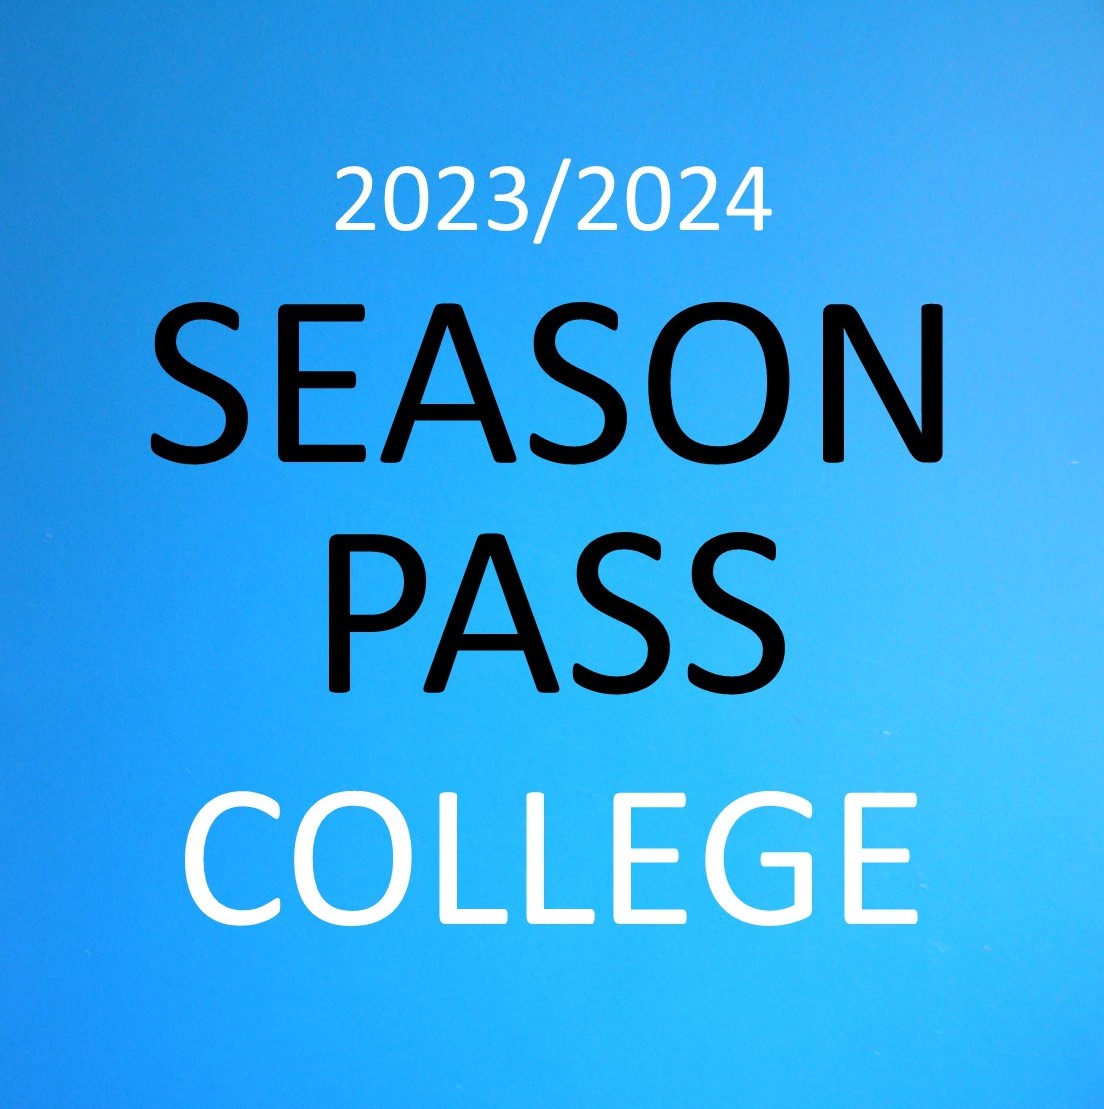 2023/2024 College Season Pass Web Store Productdetails